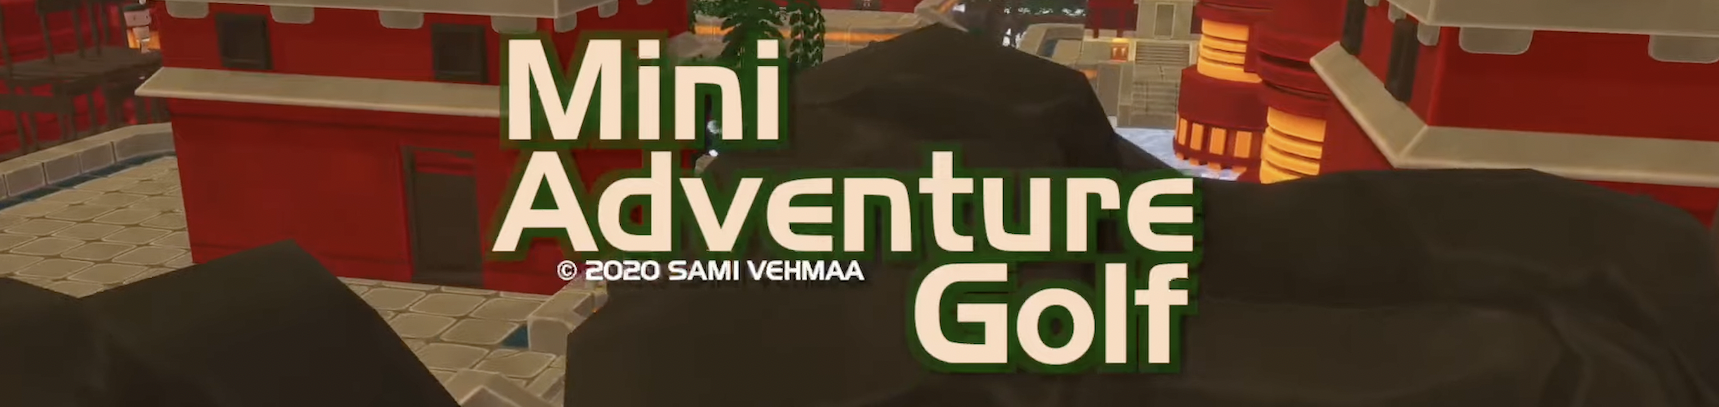 MiniAdventureGolf - Mini Golf